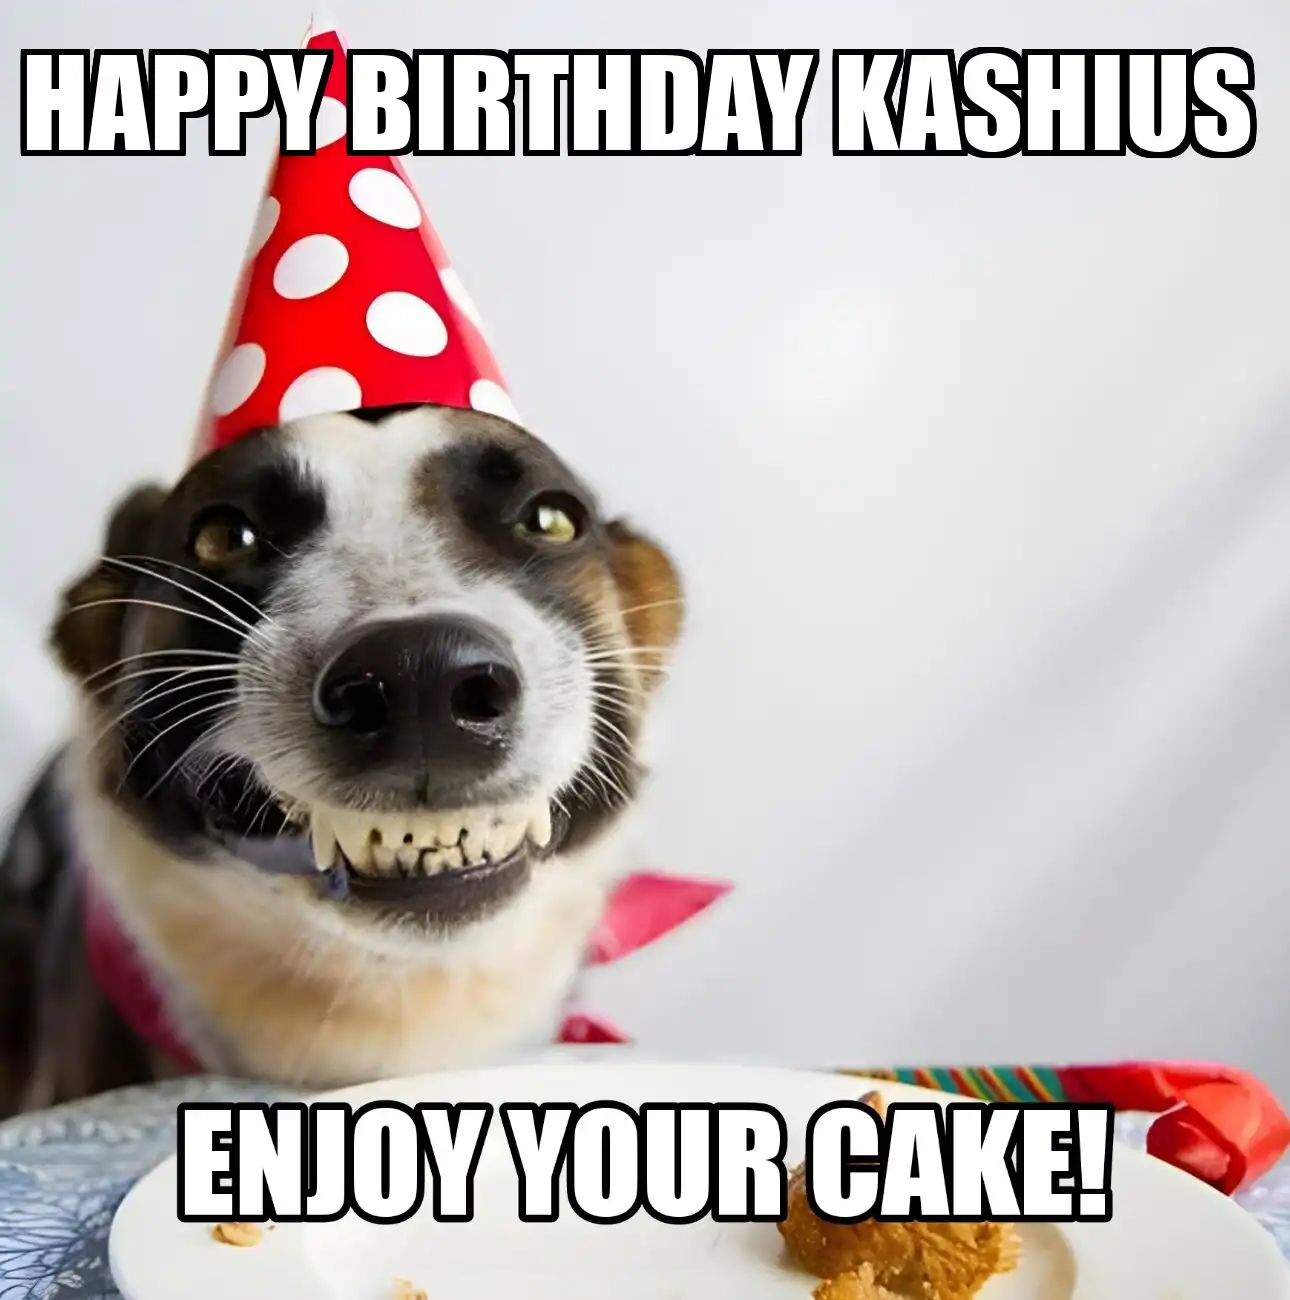 Happy Birthday Kashius Enjoy Your Cake Dog Meme